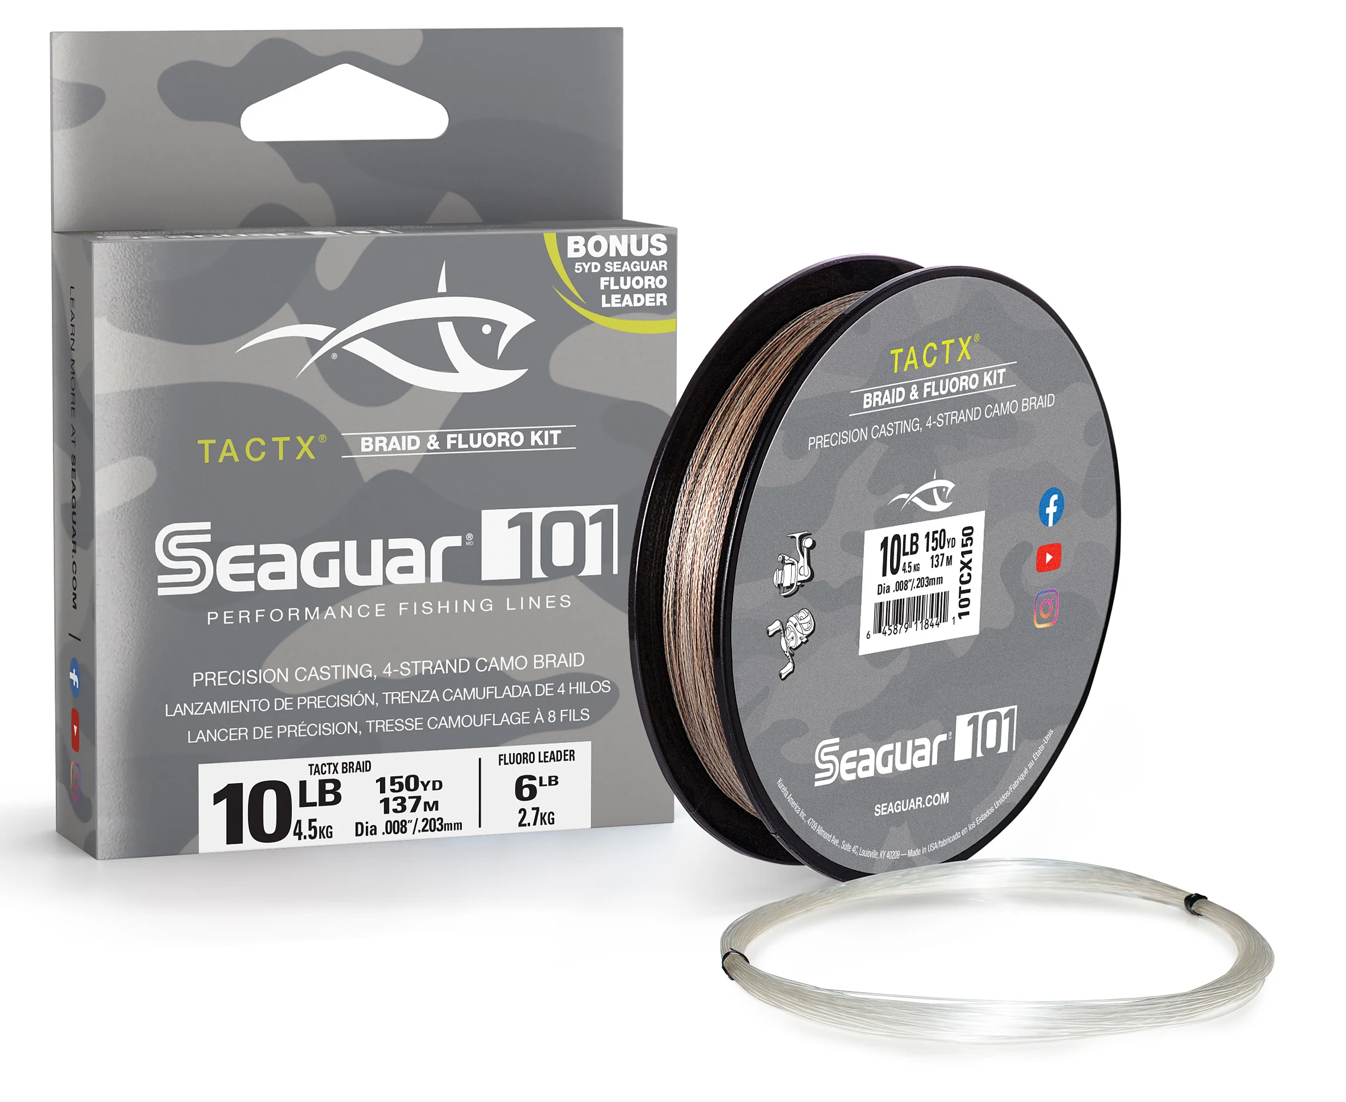 Seaguar Tactx Braid & Fluorocarbon Kit